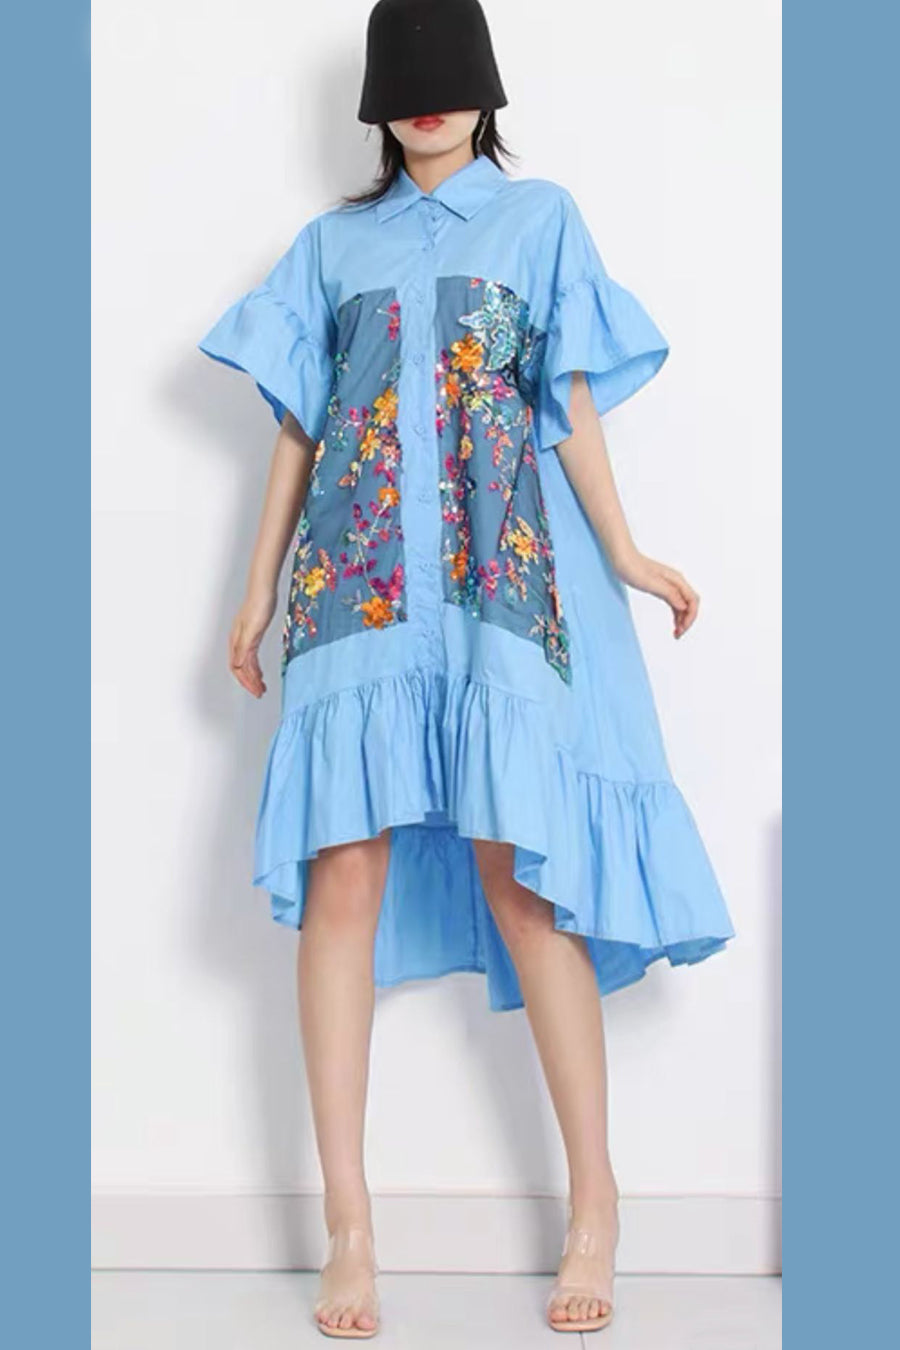 T14650 DRESS (WHT, BLUE, YELLOW)